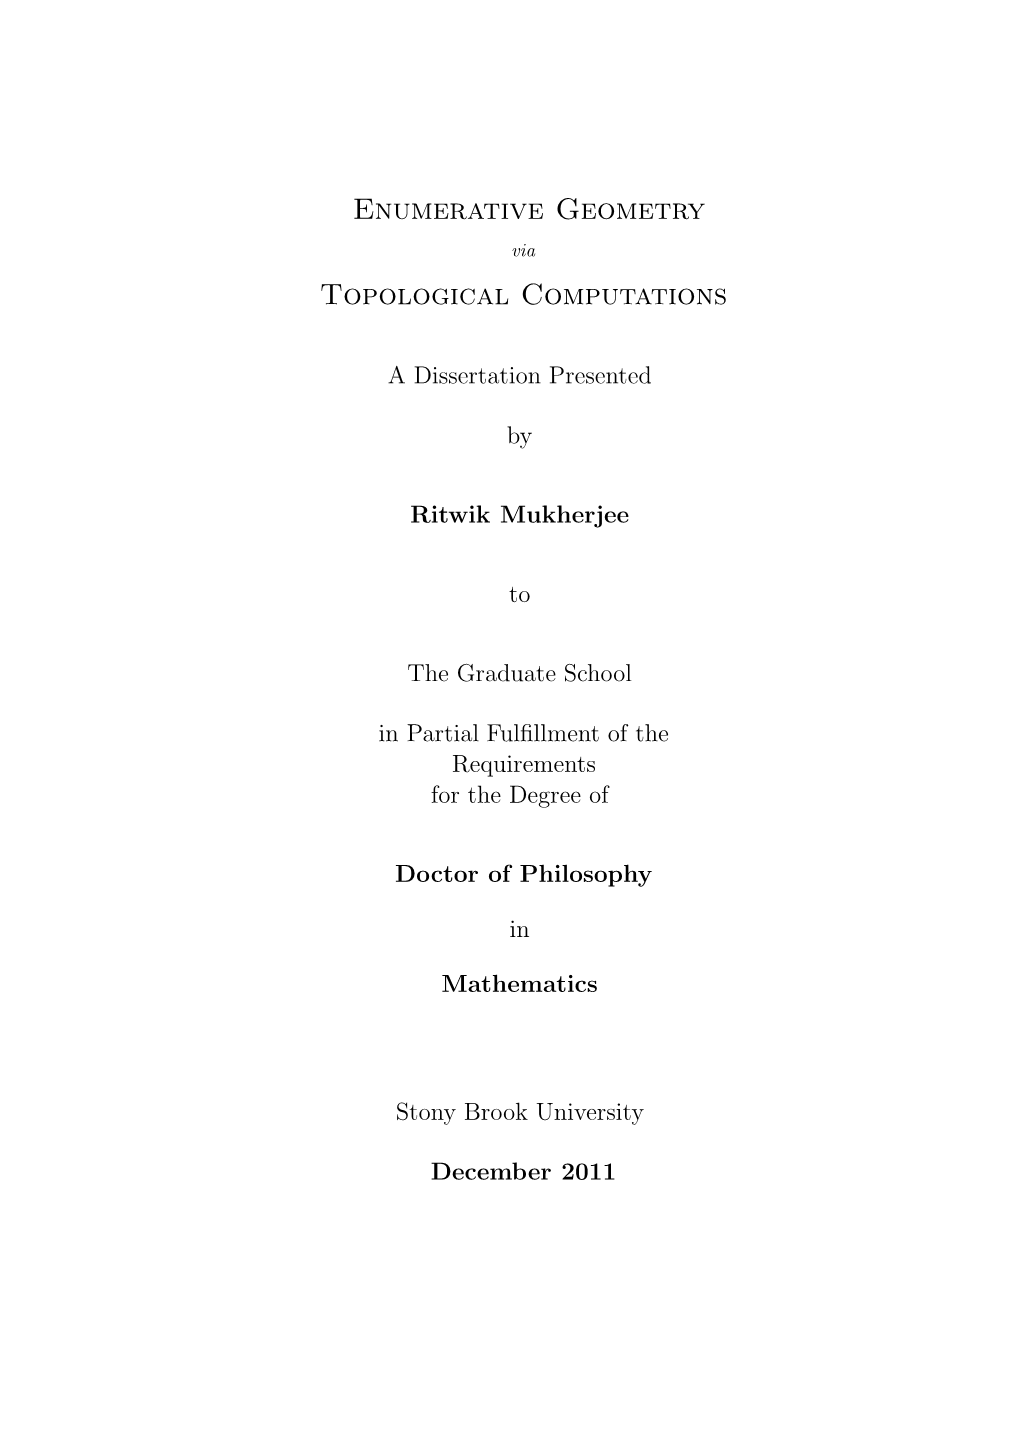 Enumerative Geometry Topological Computations